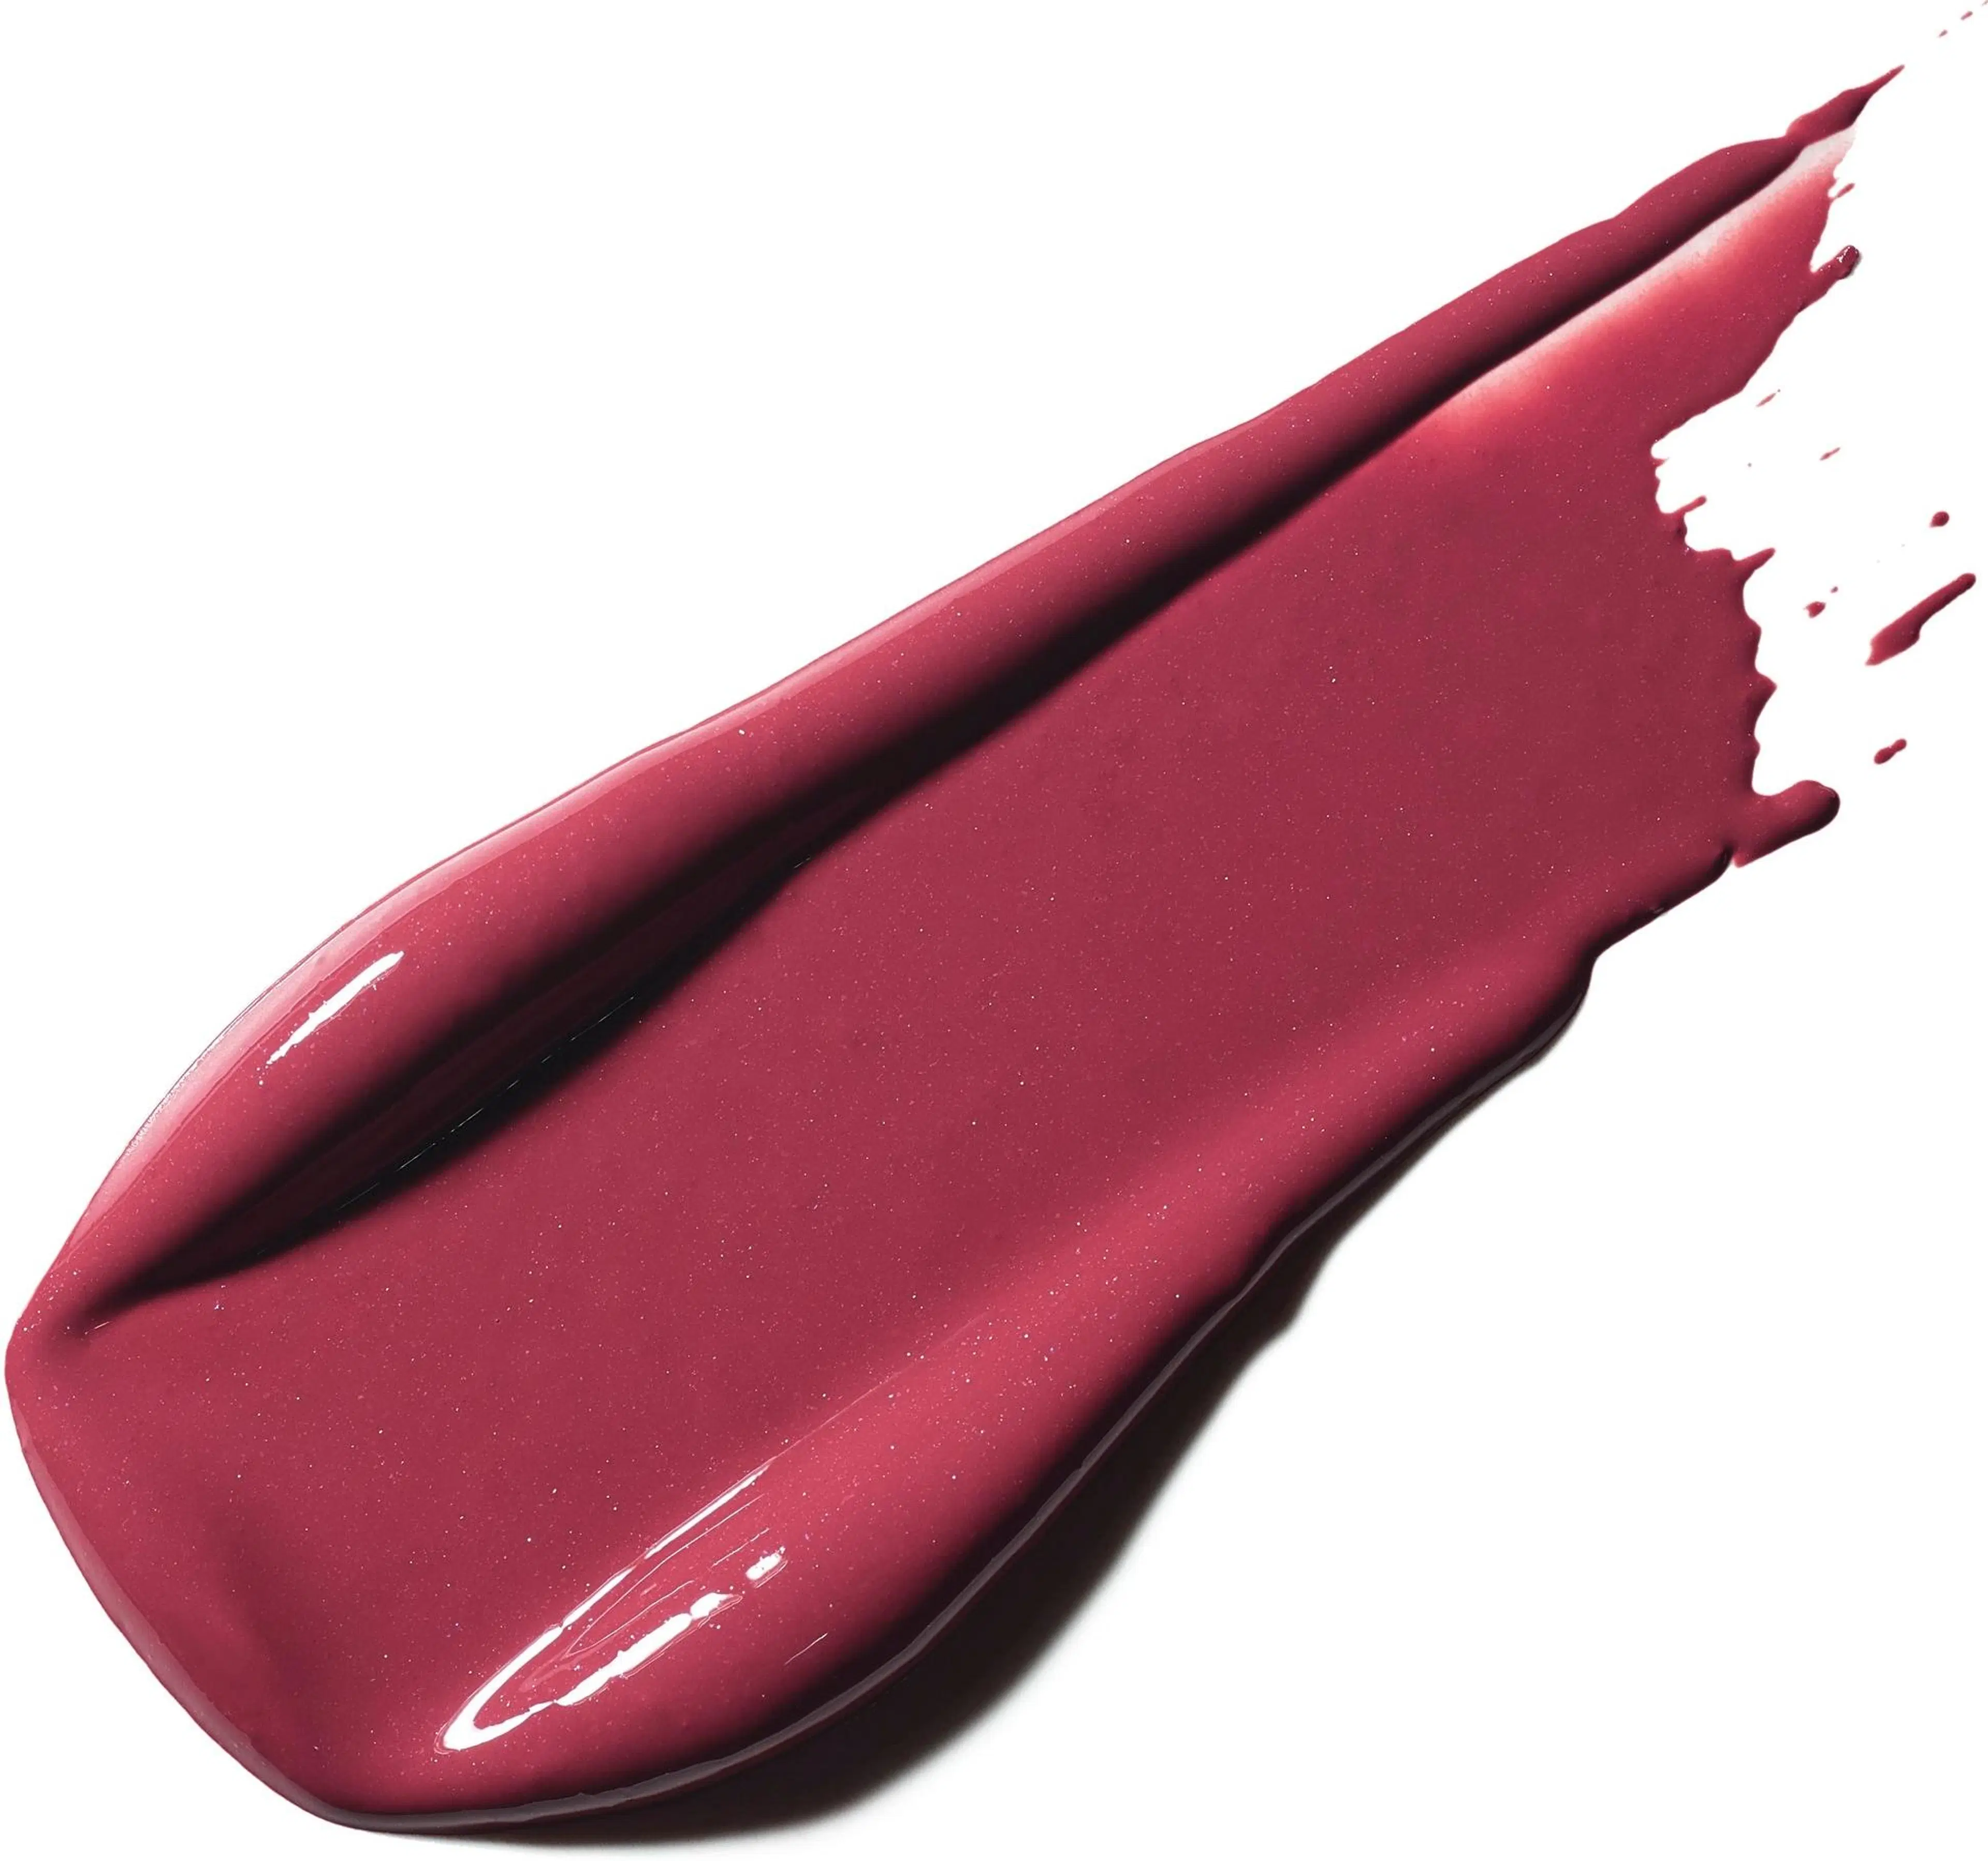 MAC Lustreglass Lipstick huulipuna 3g